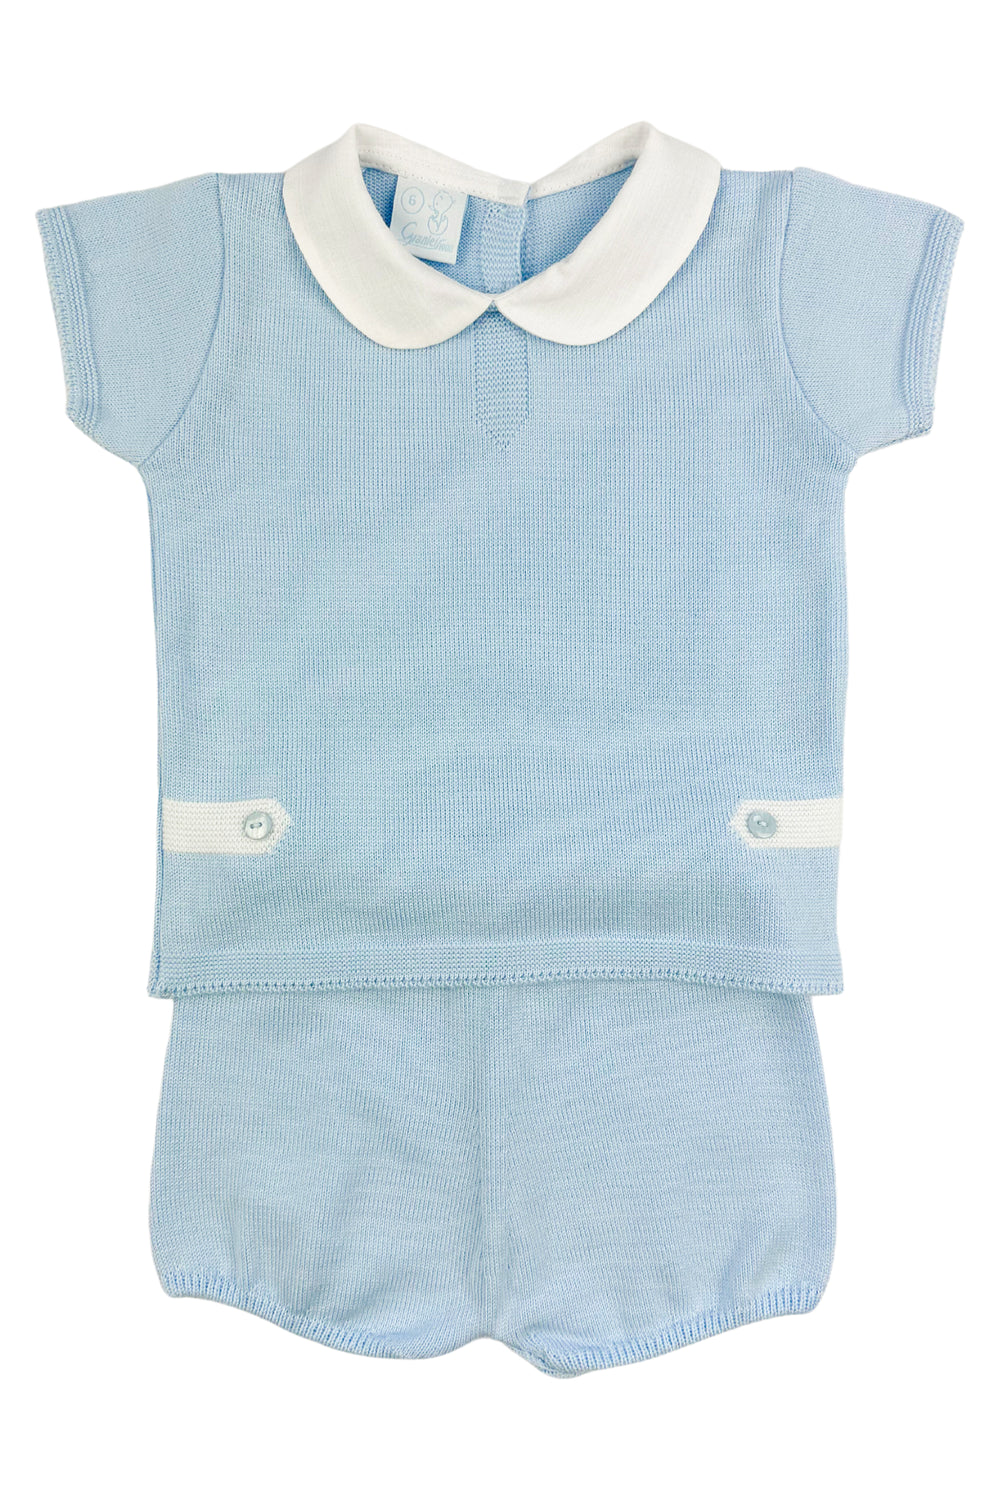 Granlei "Grayson" Blue Knit Top & Shorts | Millie and John